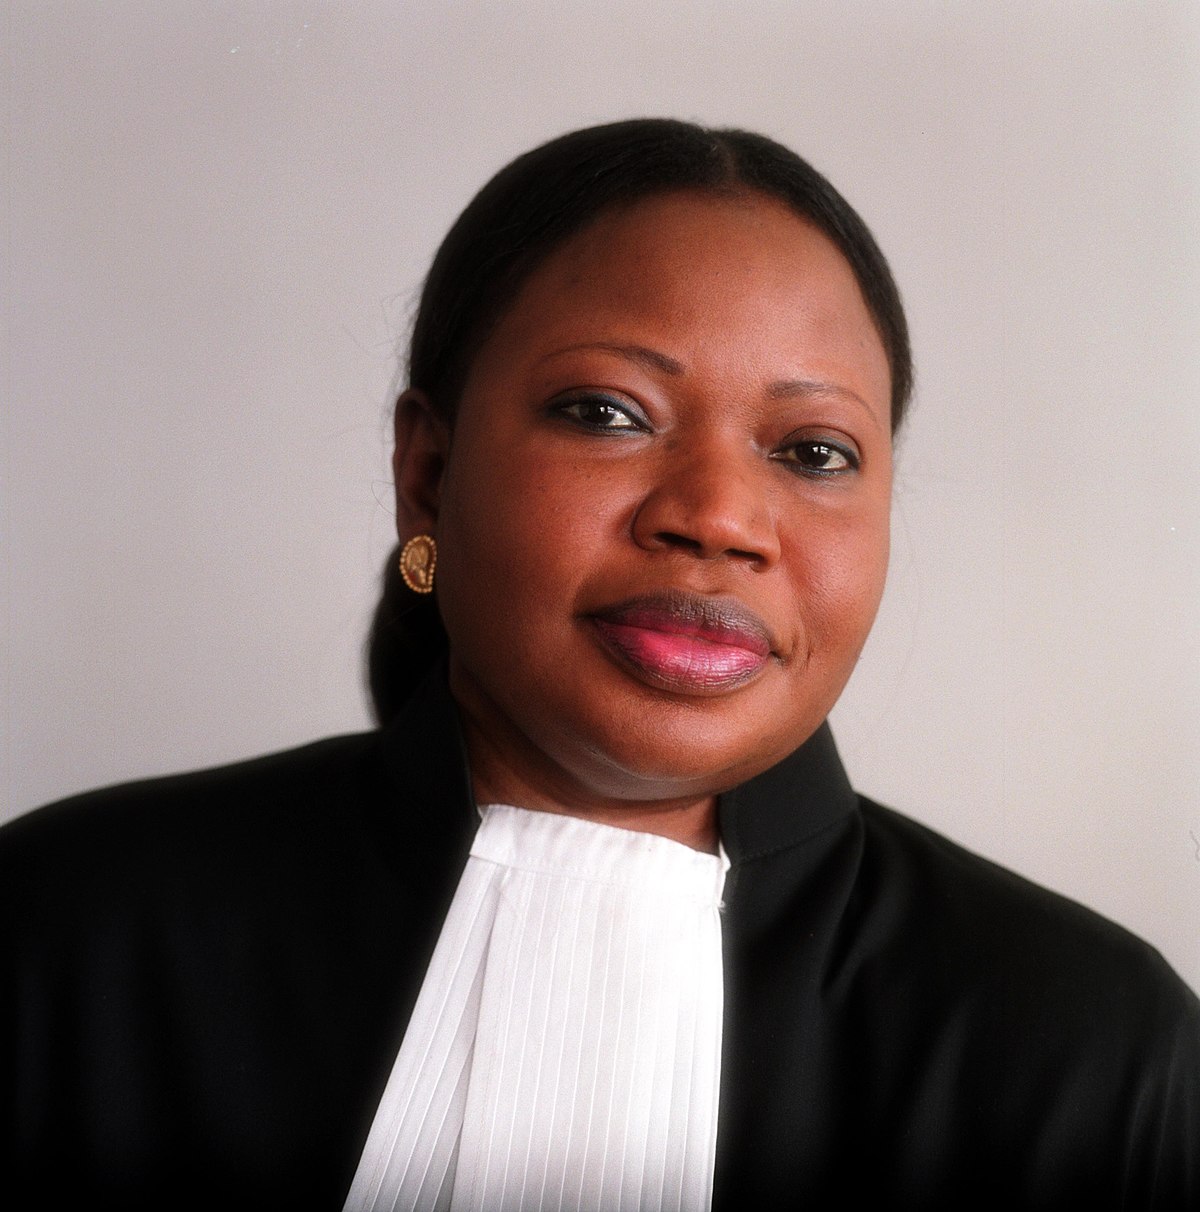 Fin del mandato de Fatou Bensouda, primera mujer africana fiscal general de la Corte Penal Internacional